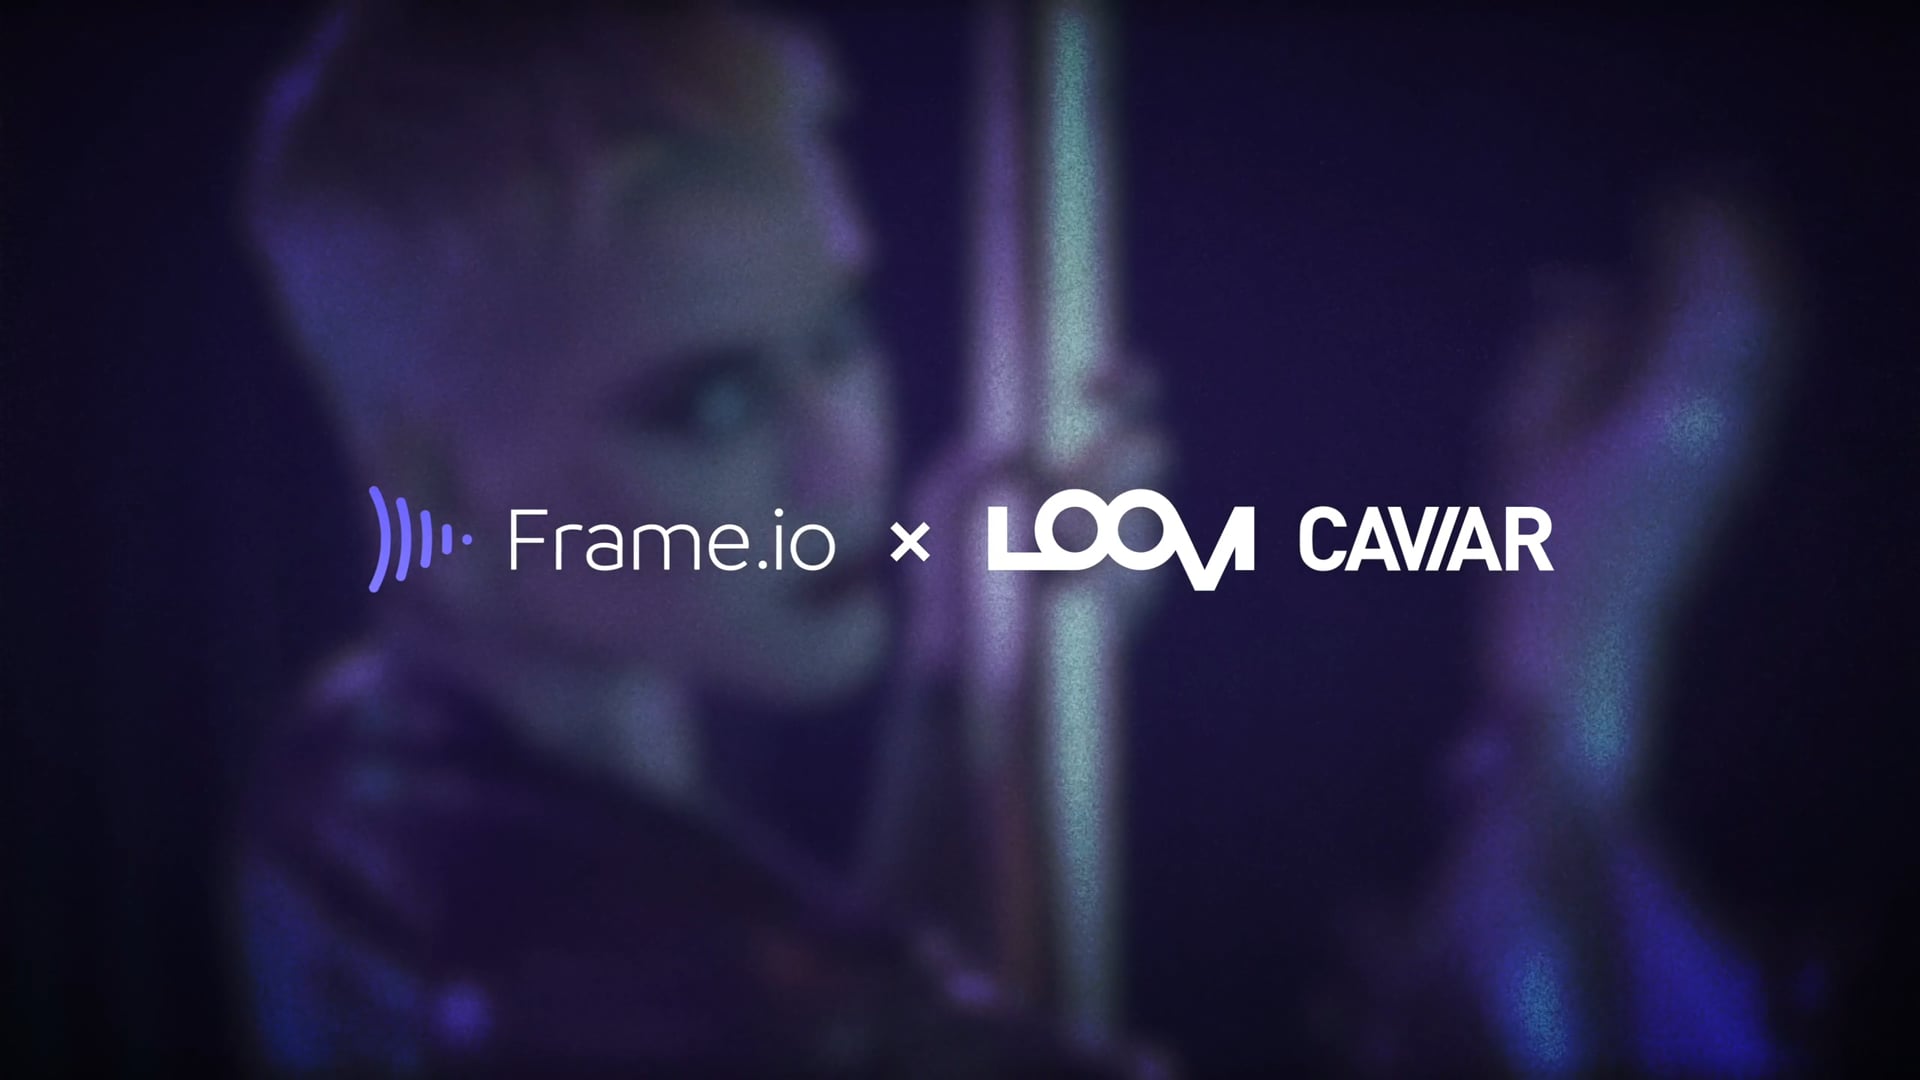 LOOM + CAVIAR workflow using FRAME.IO